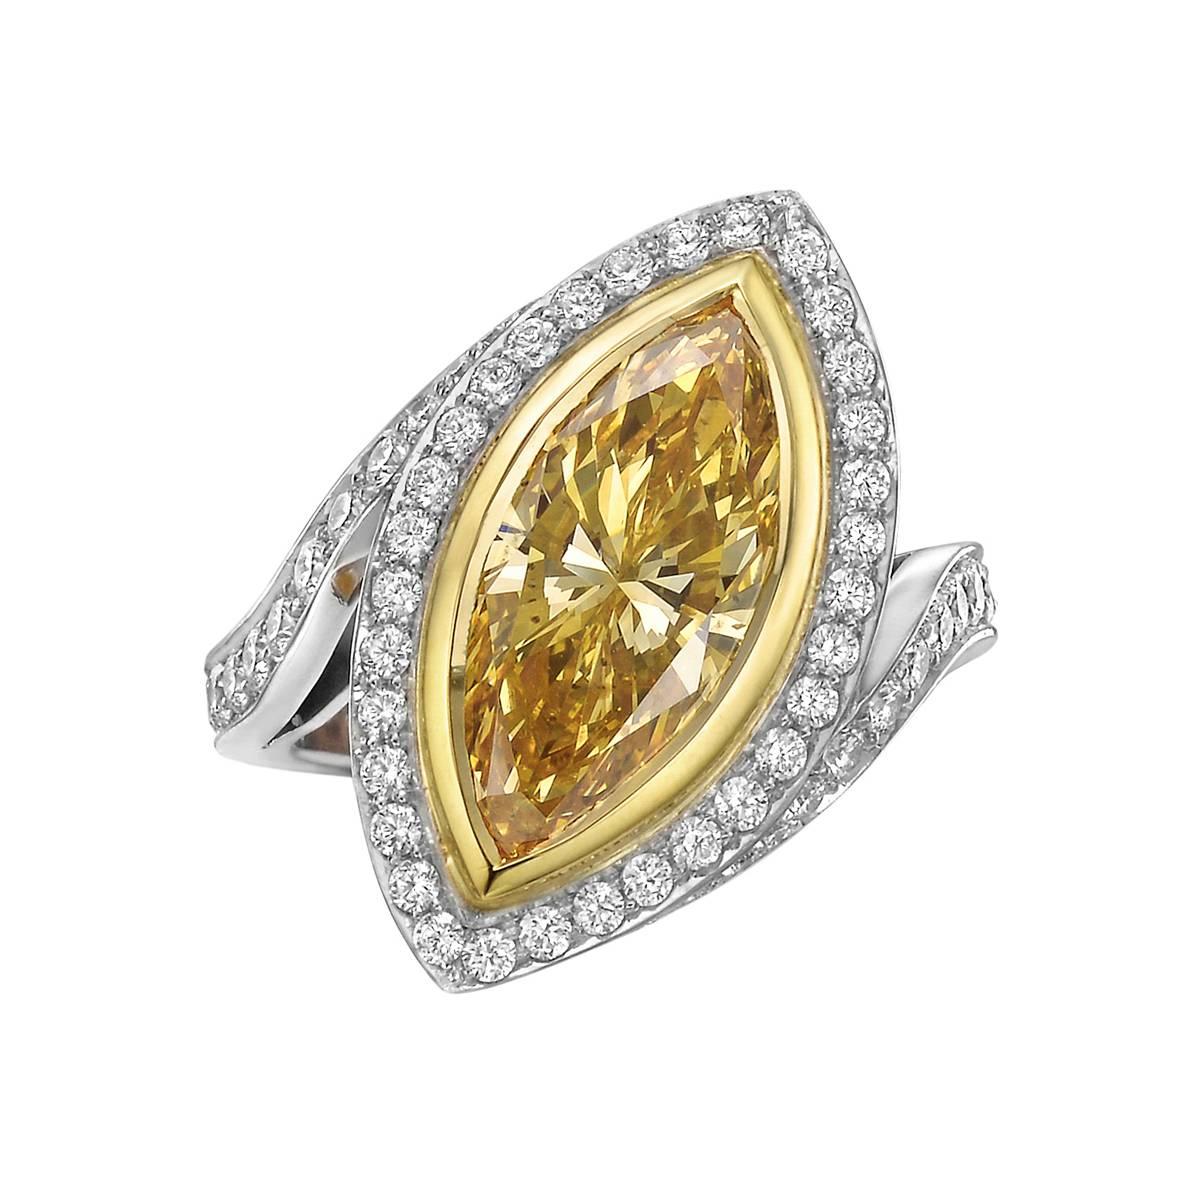 Betteridge 3.39 Carat Fancy Intense Orange-Yellow Diamond Ring For Sale